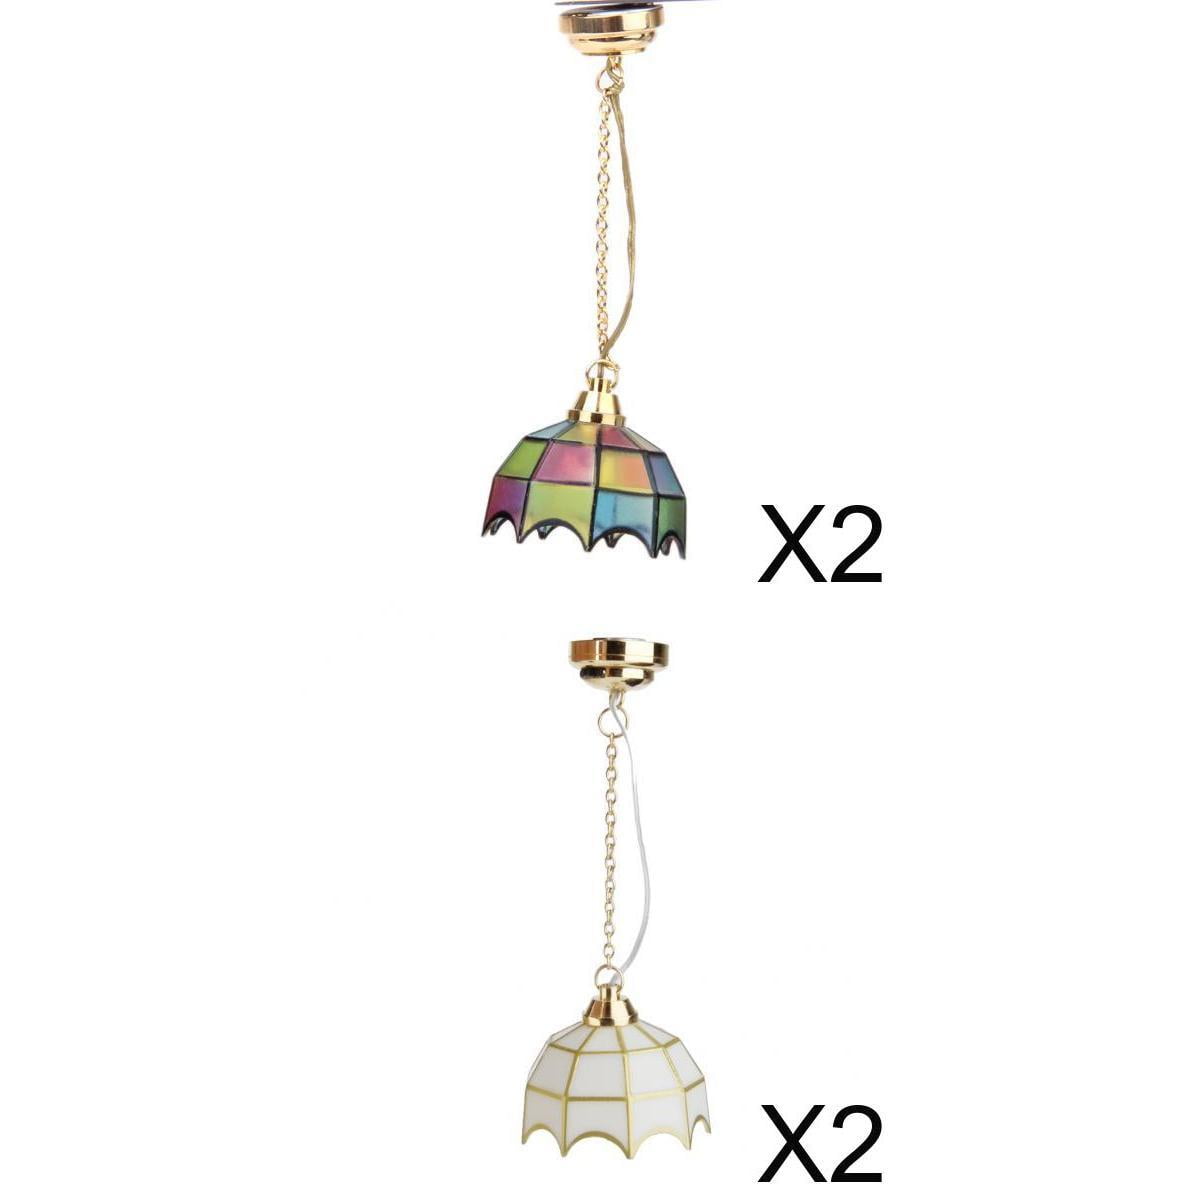 Mini LED Ceiling Light Lamp for 1/12 Dolls House Decorative Toys Accessory 